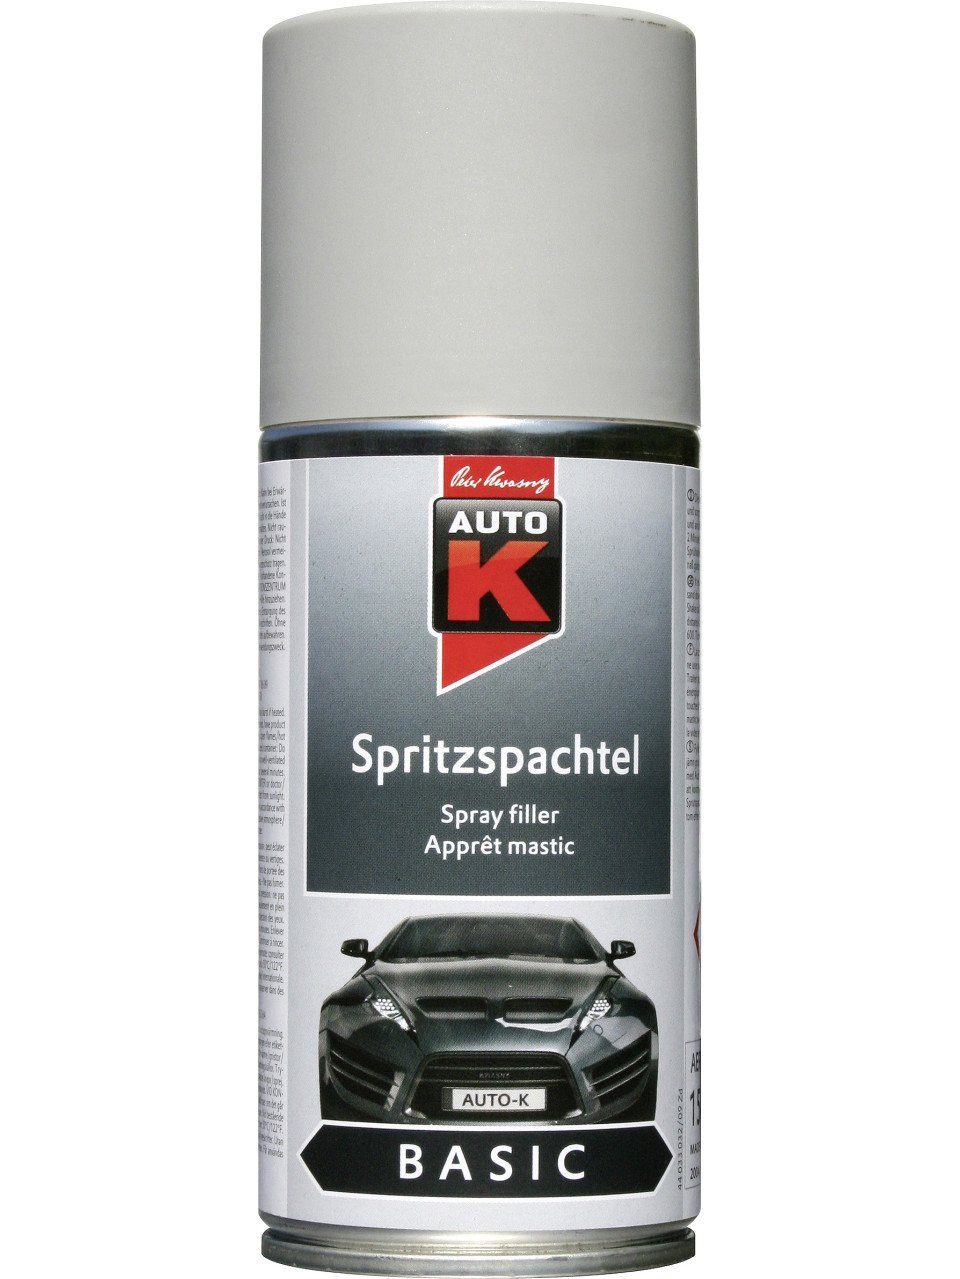 Auto-K Breitspachtel Spritzspachtel grau 150ml Basic Auto-K